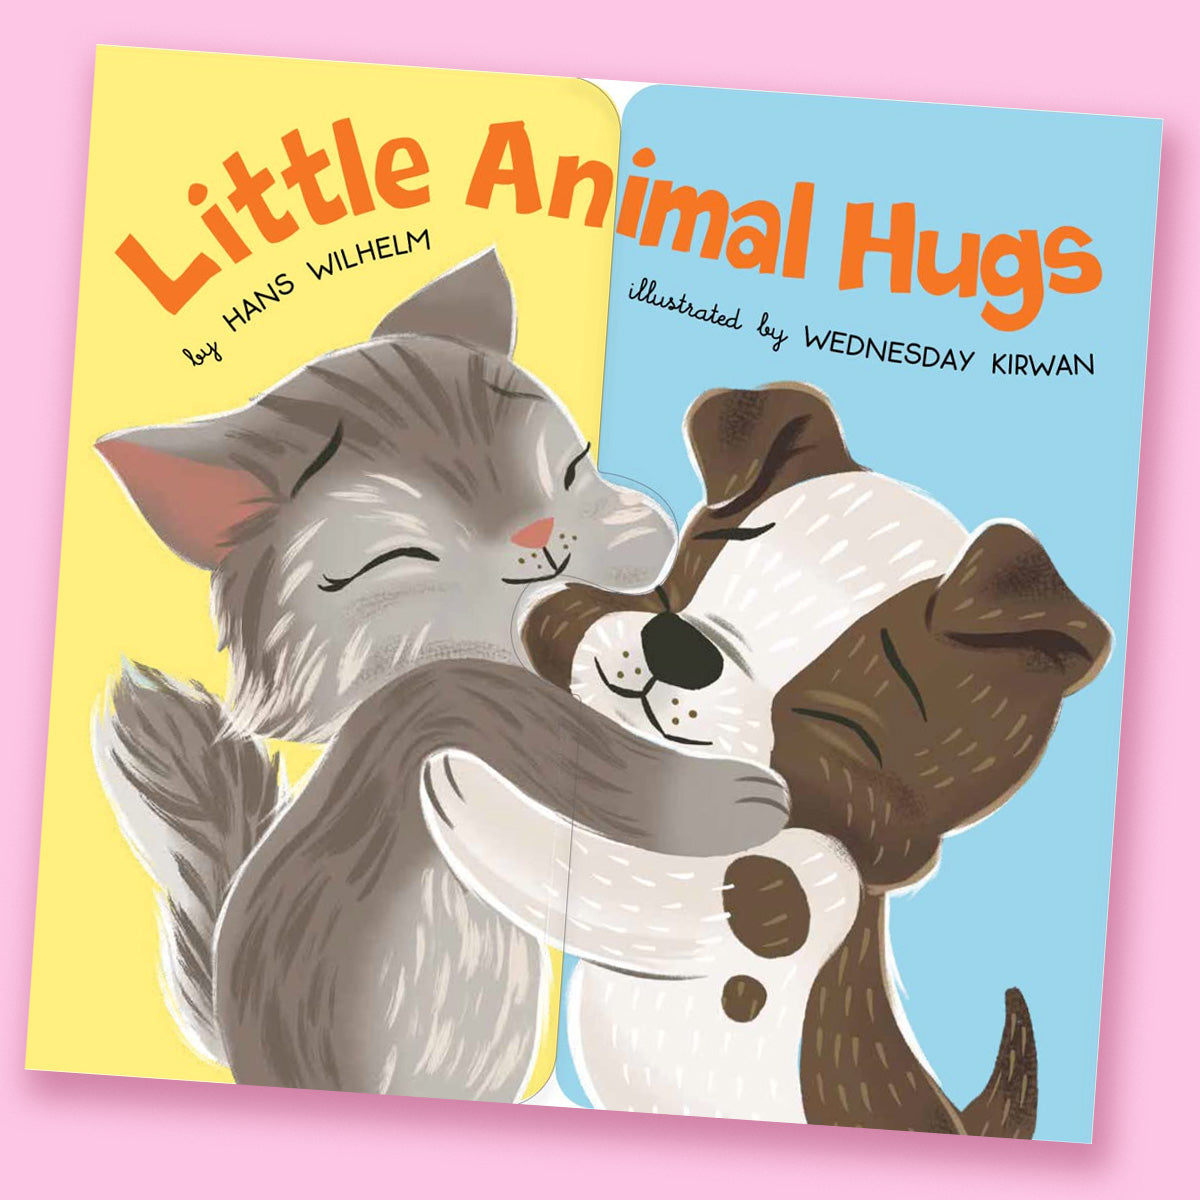 Little Animal Hugs by Hans Wilhelm and Wednesday Kirwan